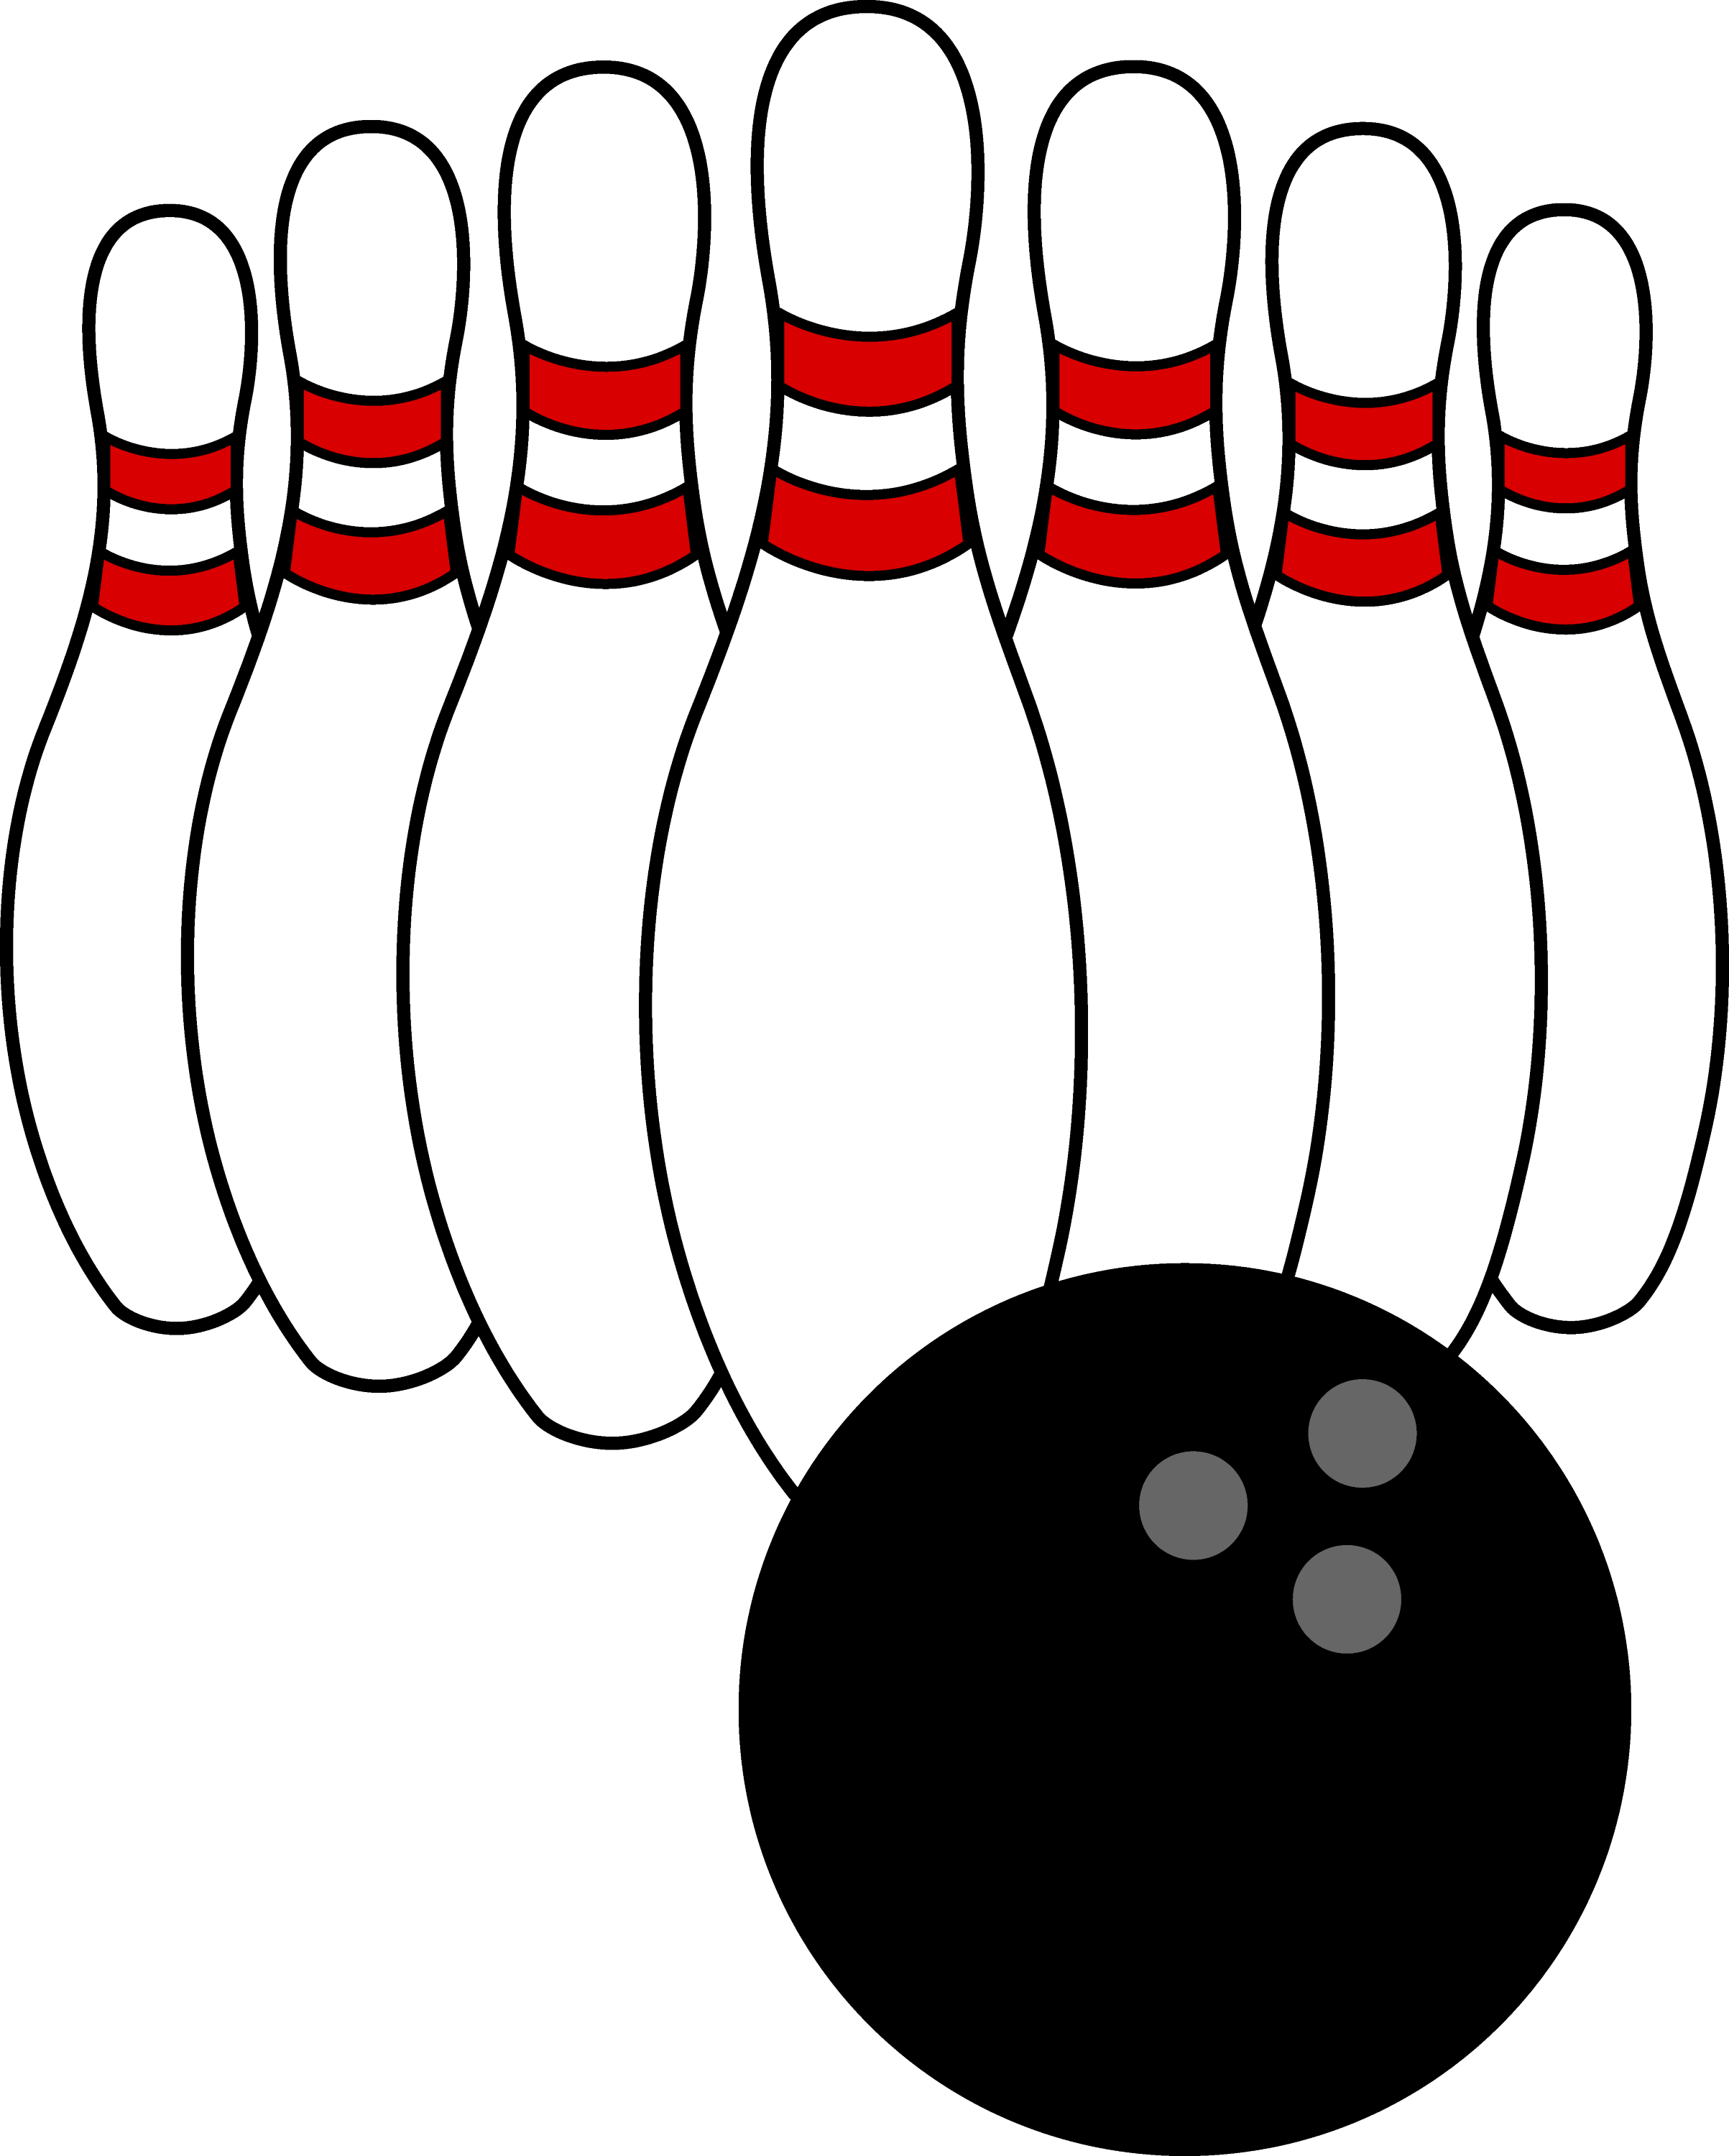 Bowling Ball and Pins Free Clip Art